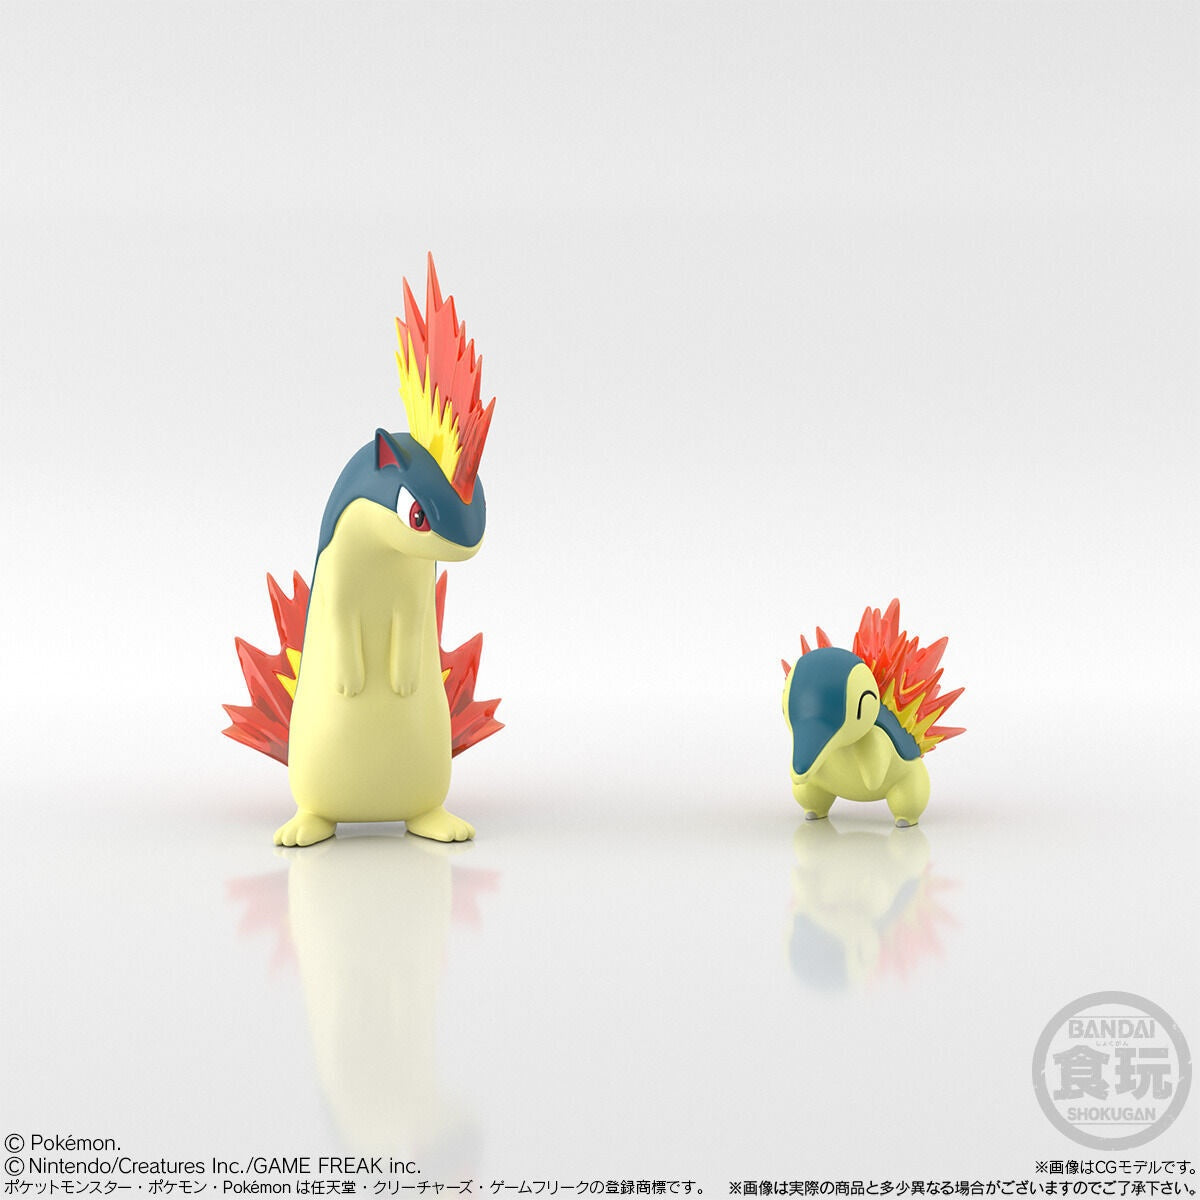 Bandai - Shokugan - Pokemon Scale World Johto Region Set (Reissue) - Marvelous Toys